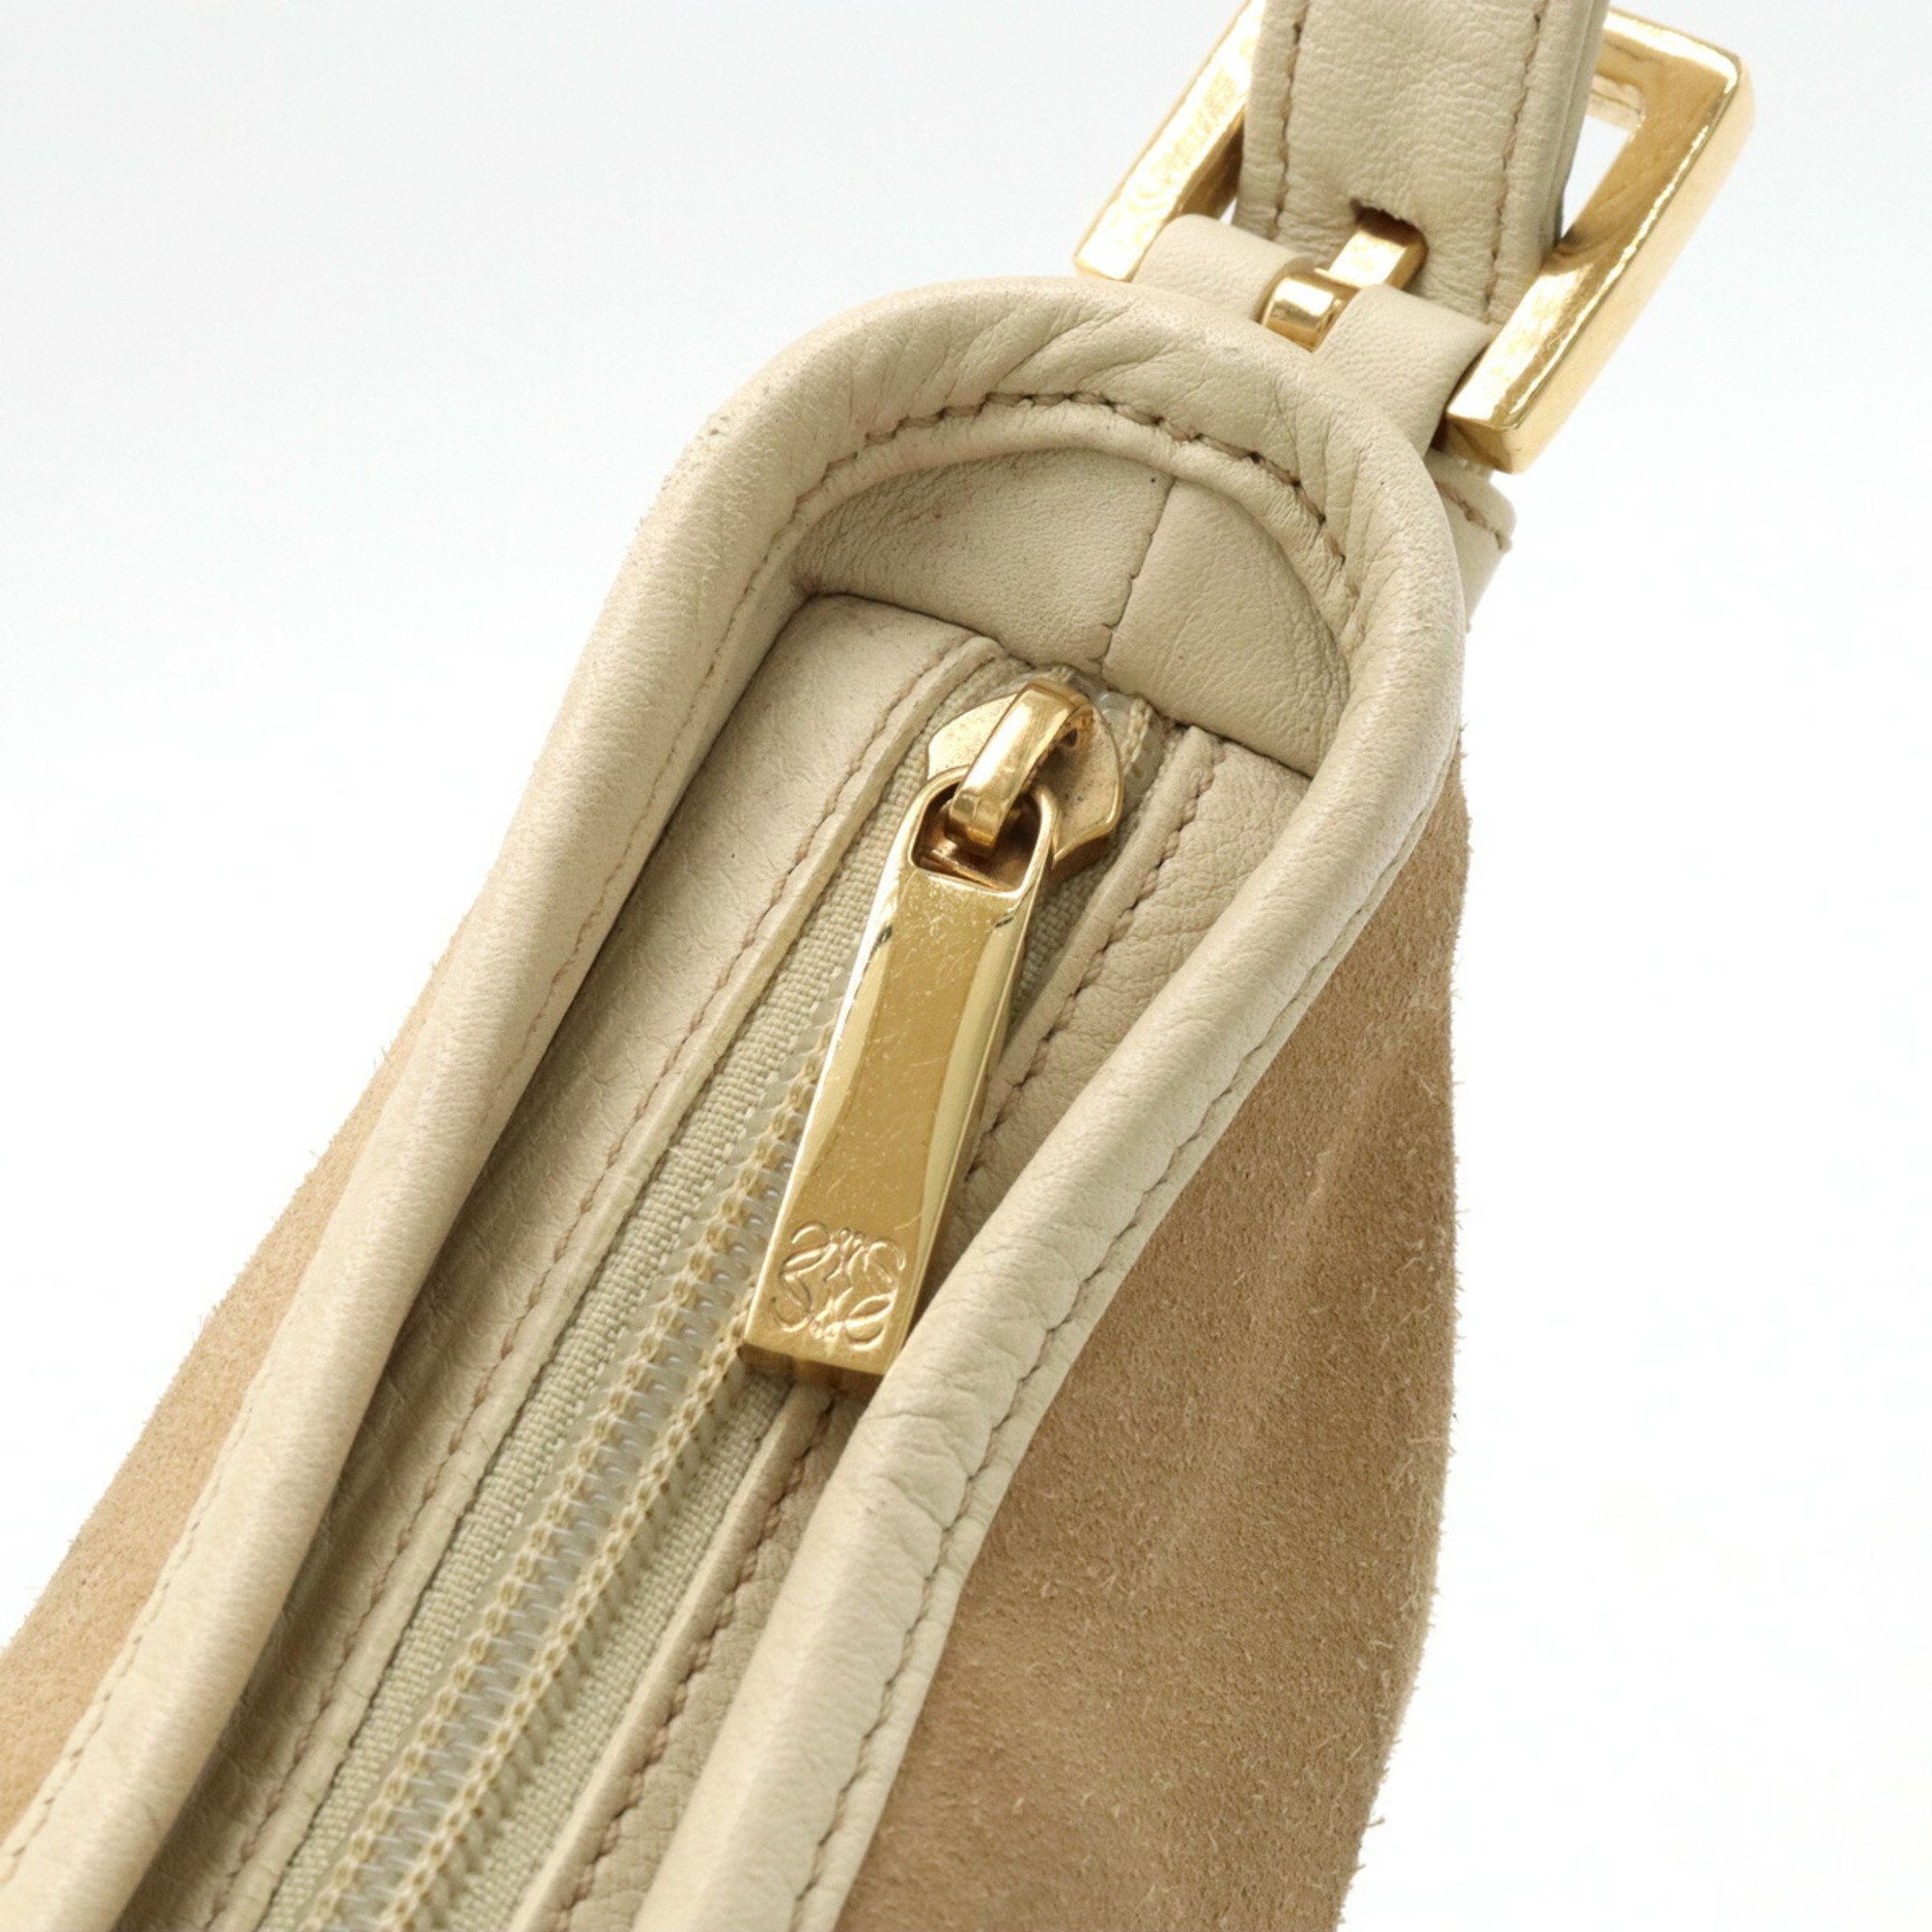 LOEWE Anagram Shoulder Bag Suede Leather Beige Ivory